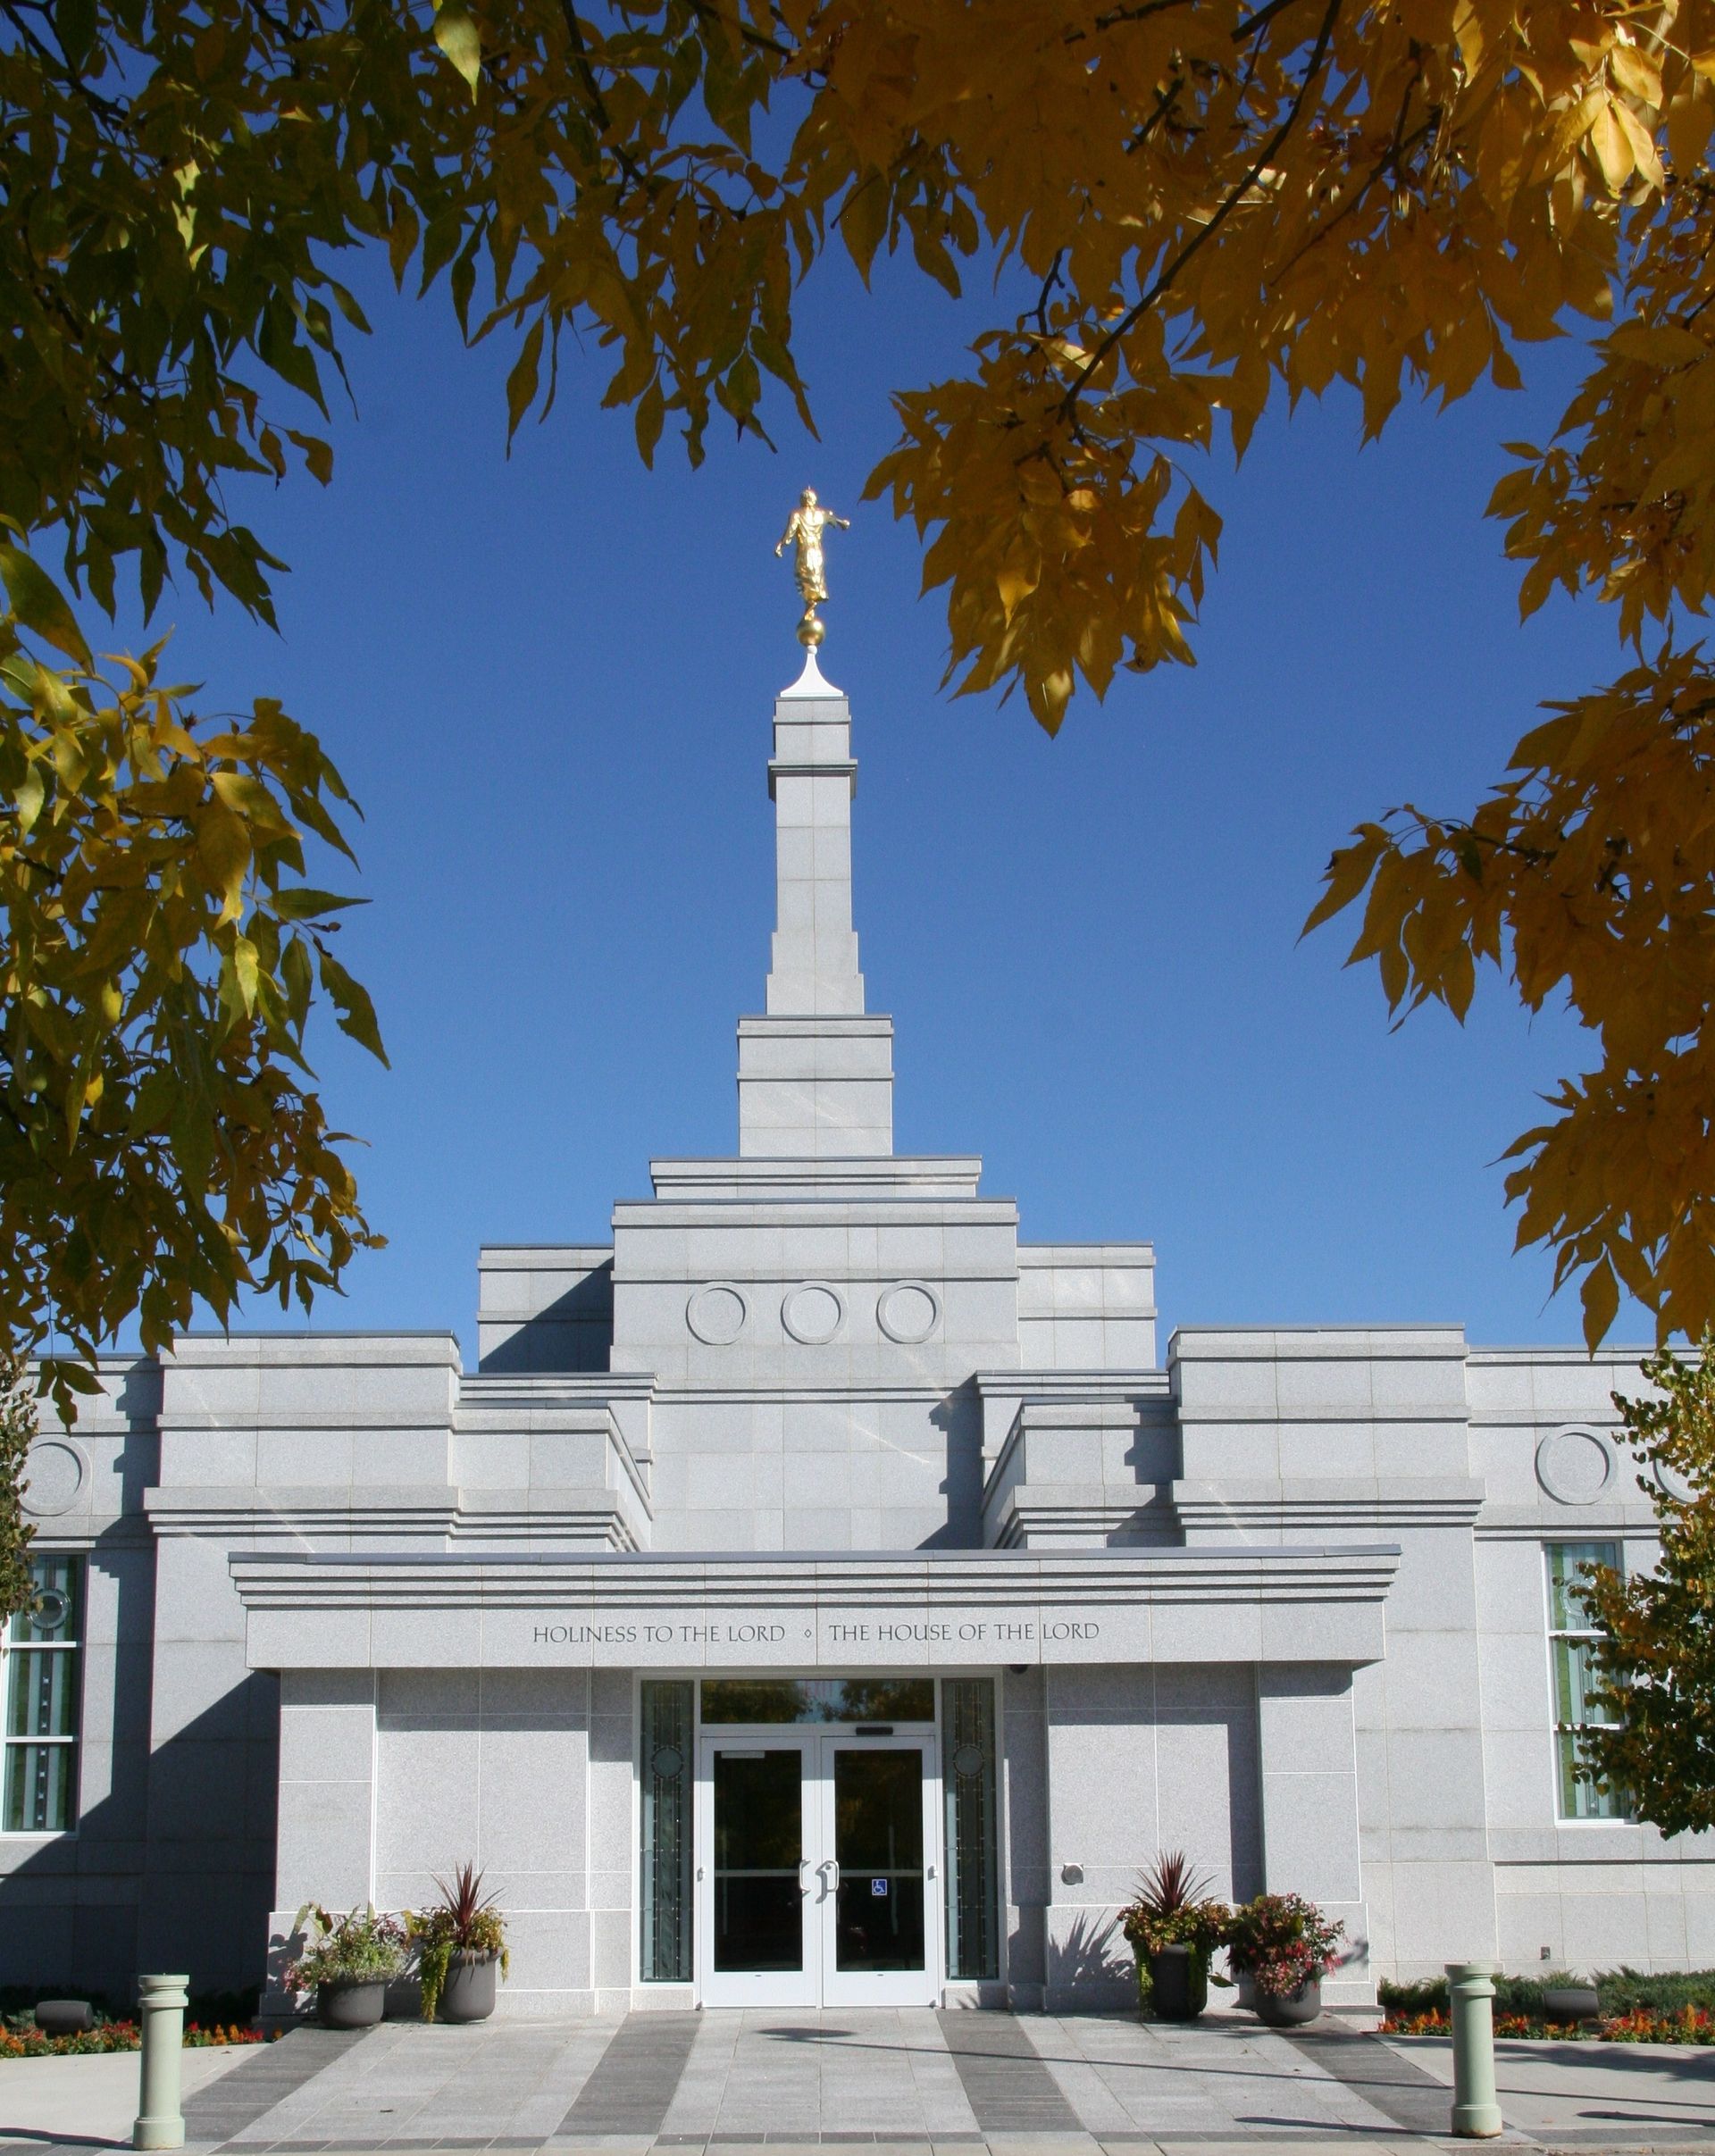 The Regina Saskatchewan Temple entrance, including scenery.